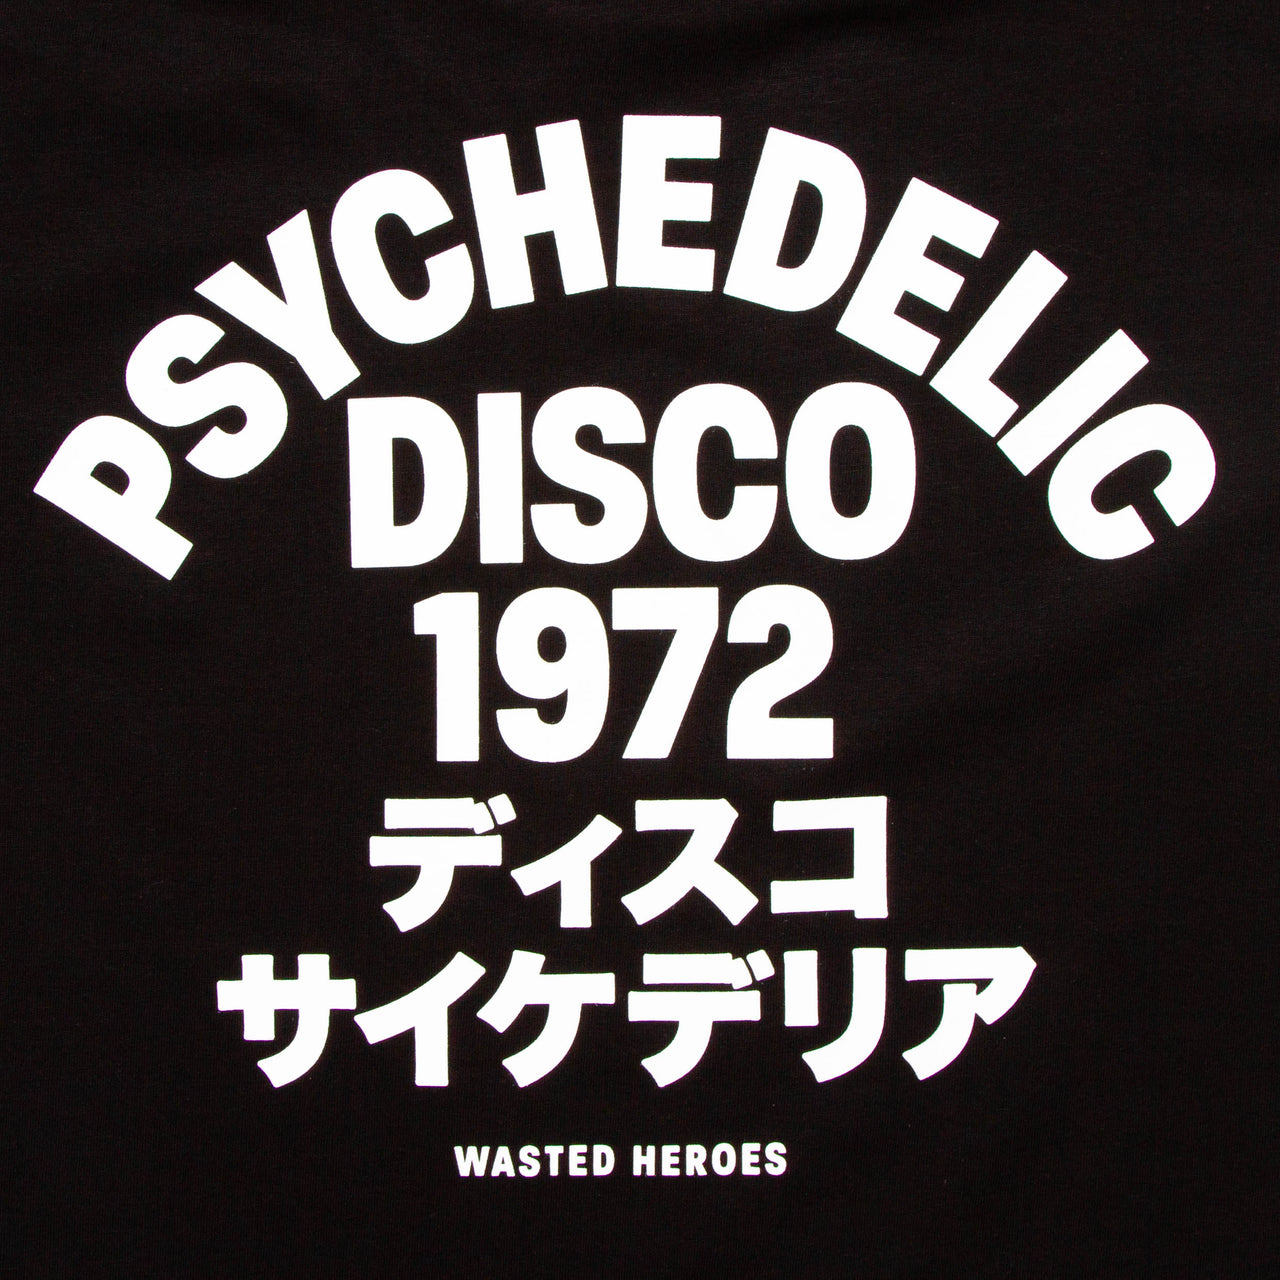 1972 Psychedelic Disco Back Print - Tshirt - Black